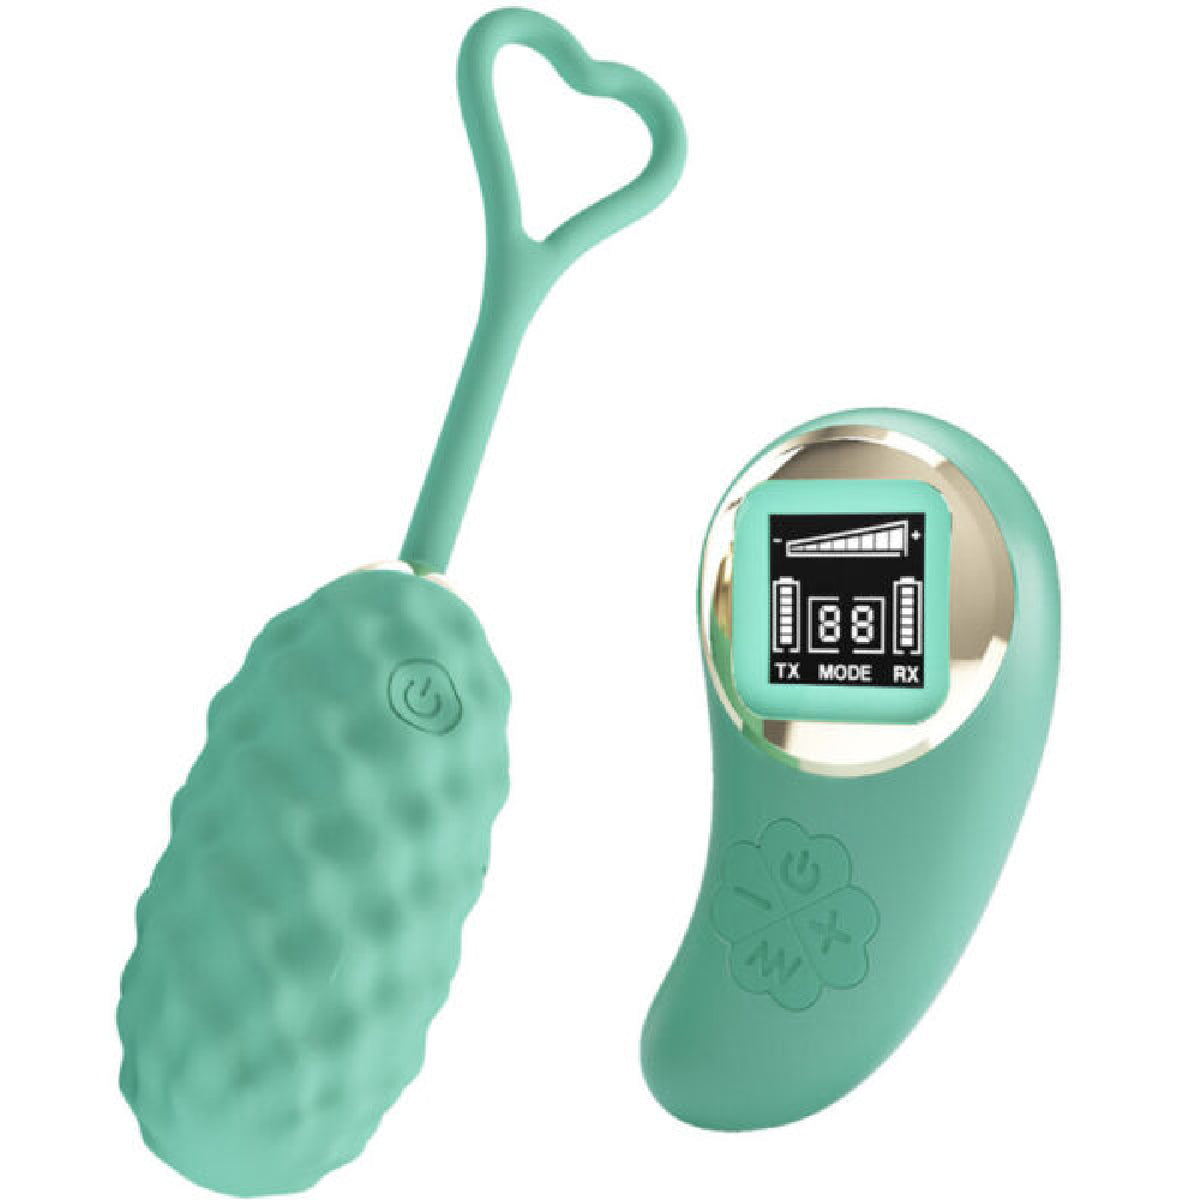 Vivian Remote Control Vibrating Egg - Turquoise